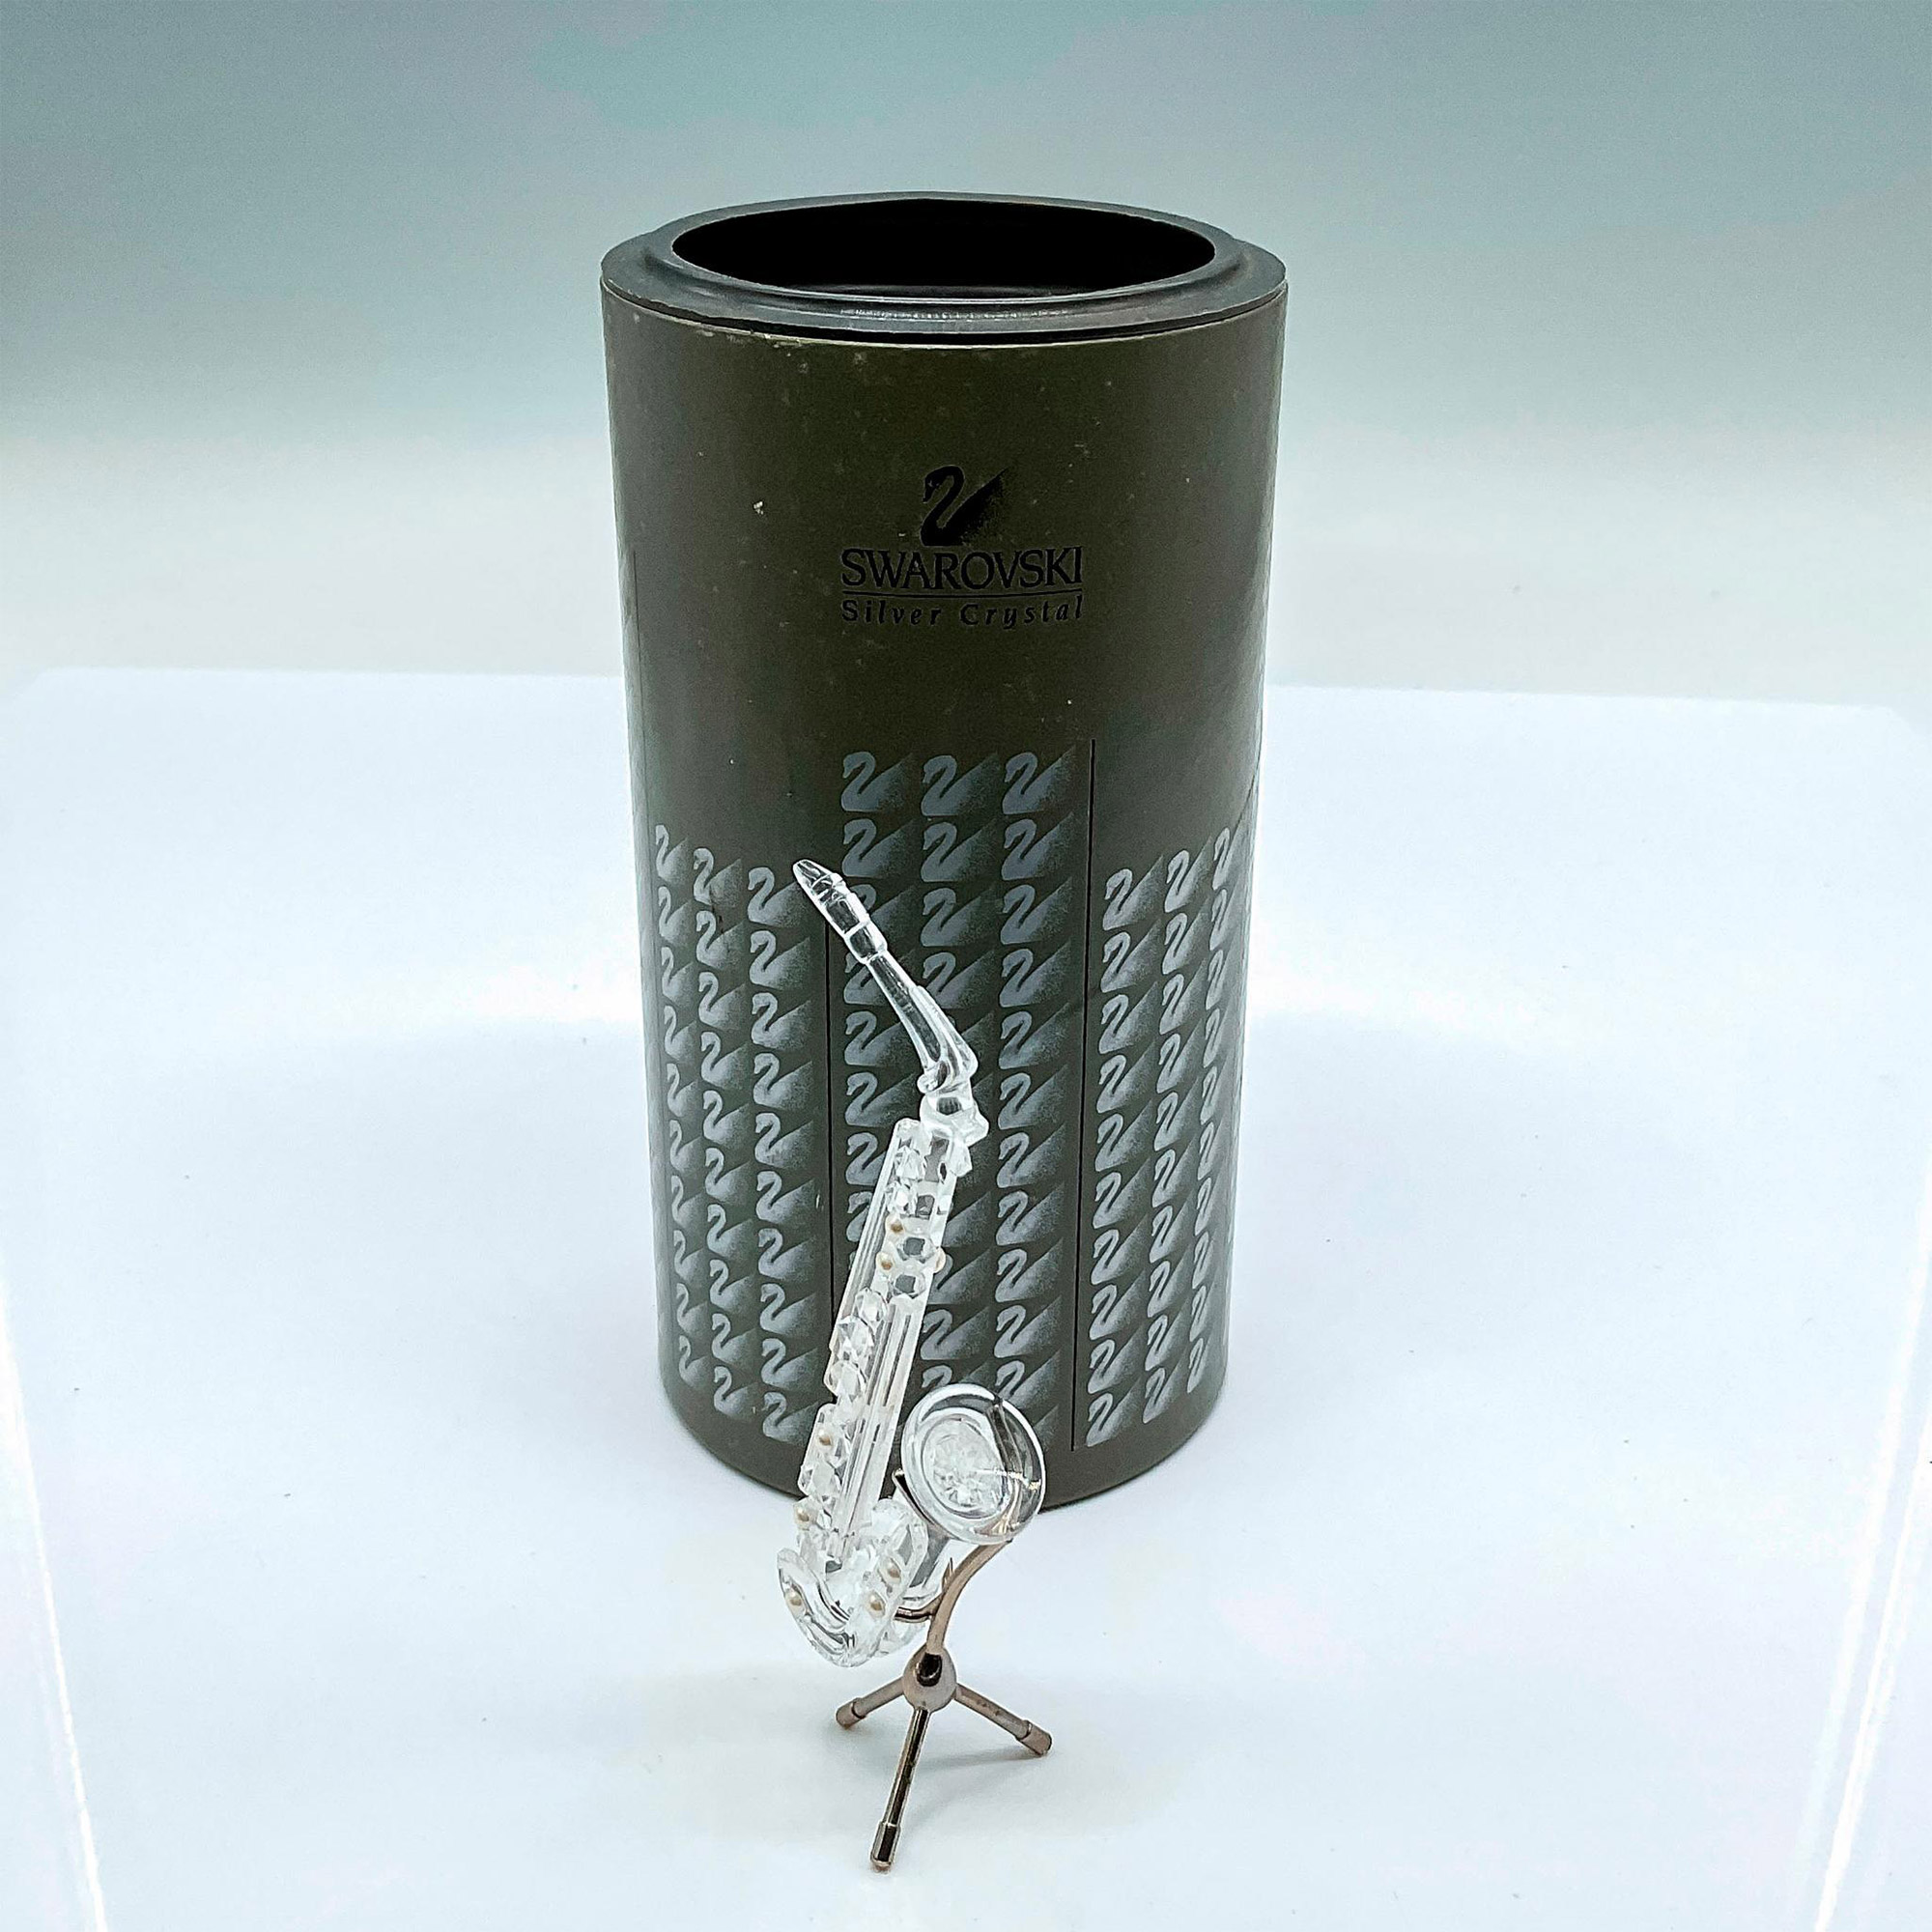 Swarovski Silver Crystal Figurine, Saxophone - Image 3 of 3